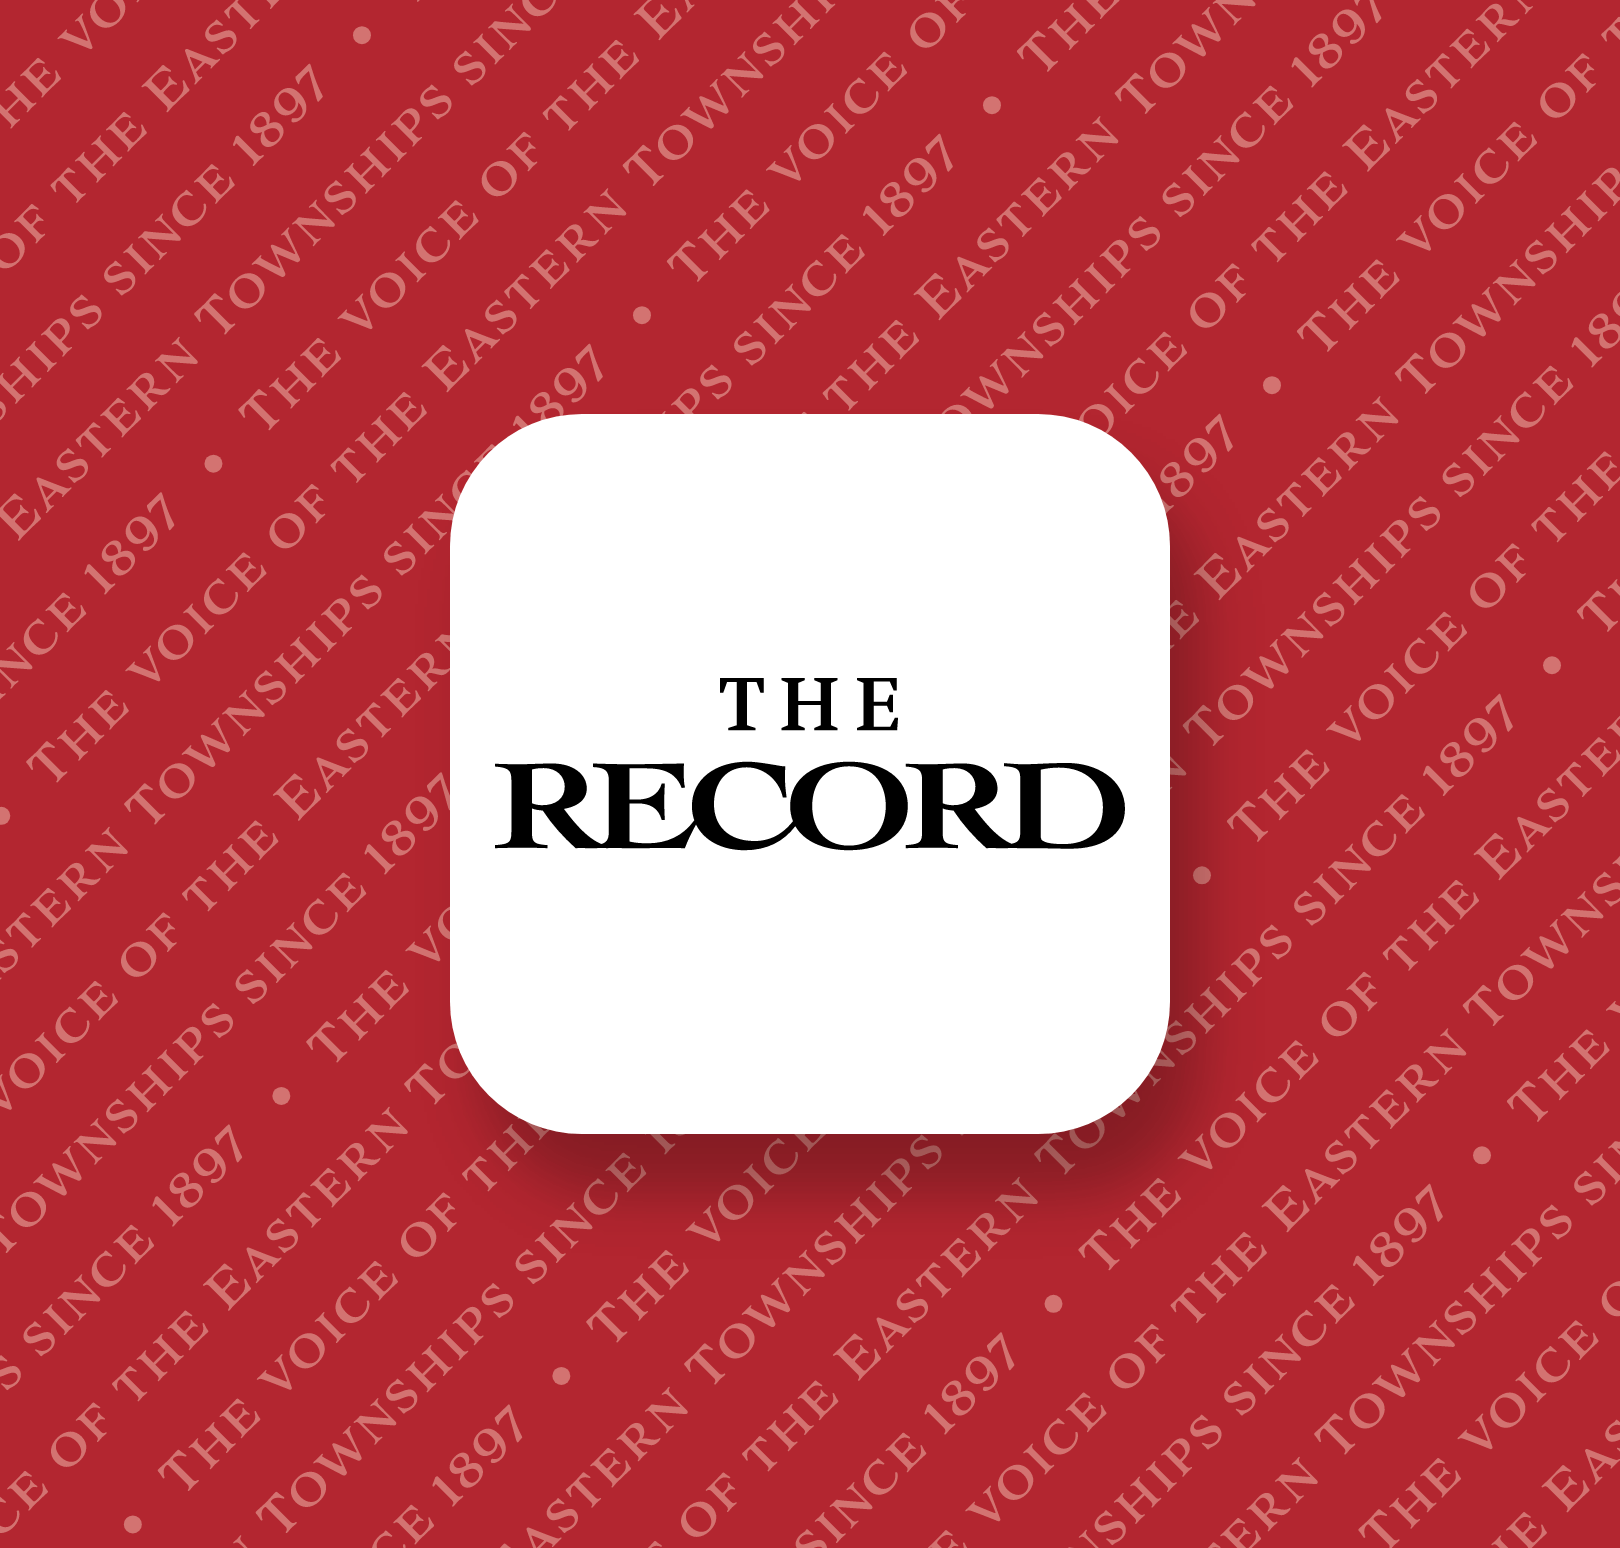 Sherbrooke Record